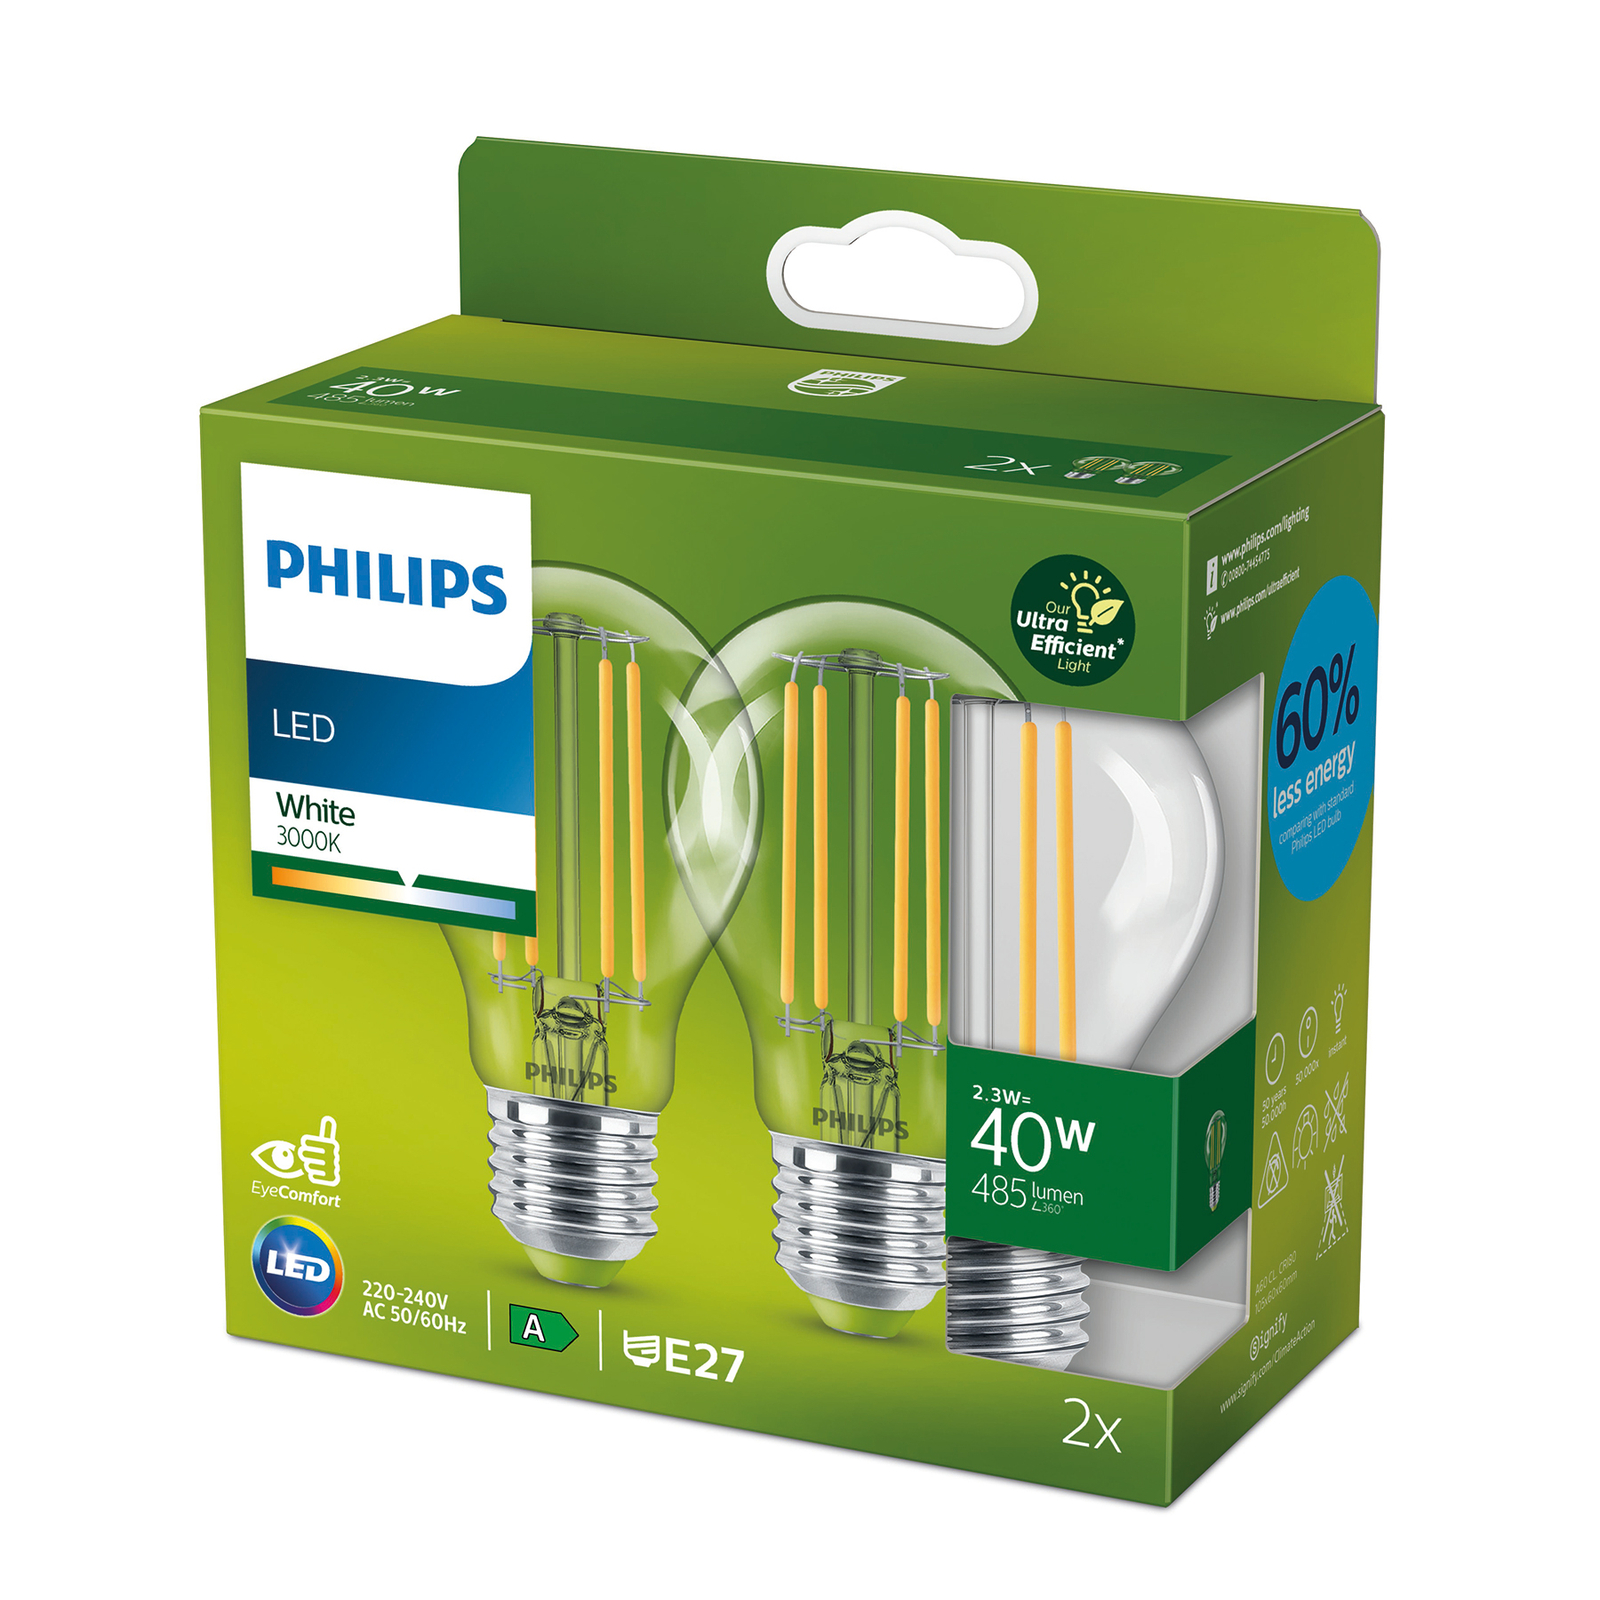 Philips LED-Lampe E27 A60 2,3W 485lm 3.000K 2er